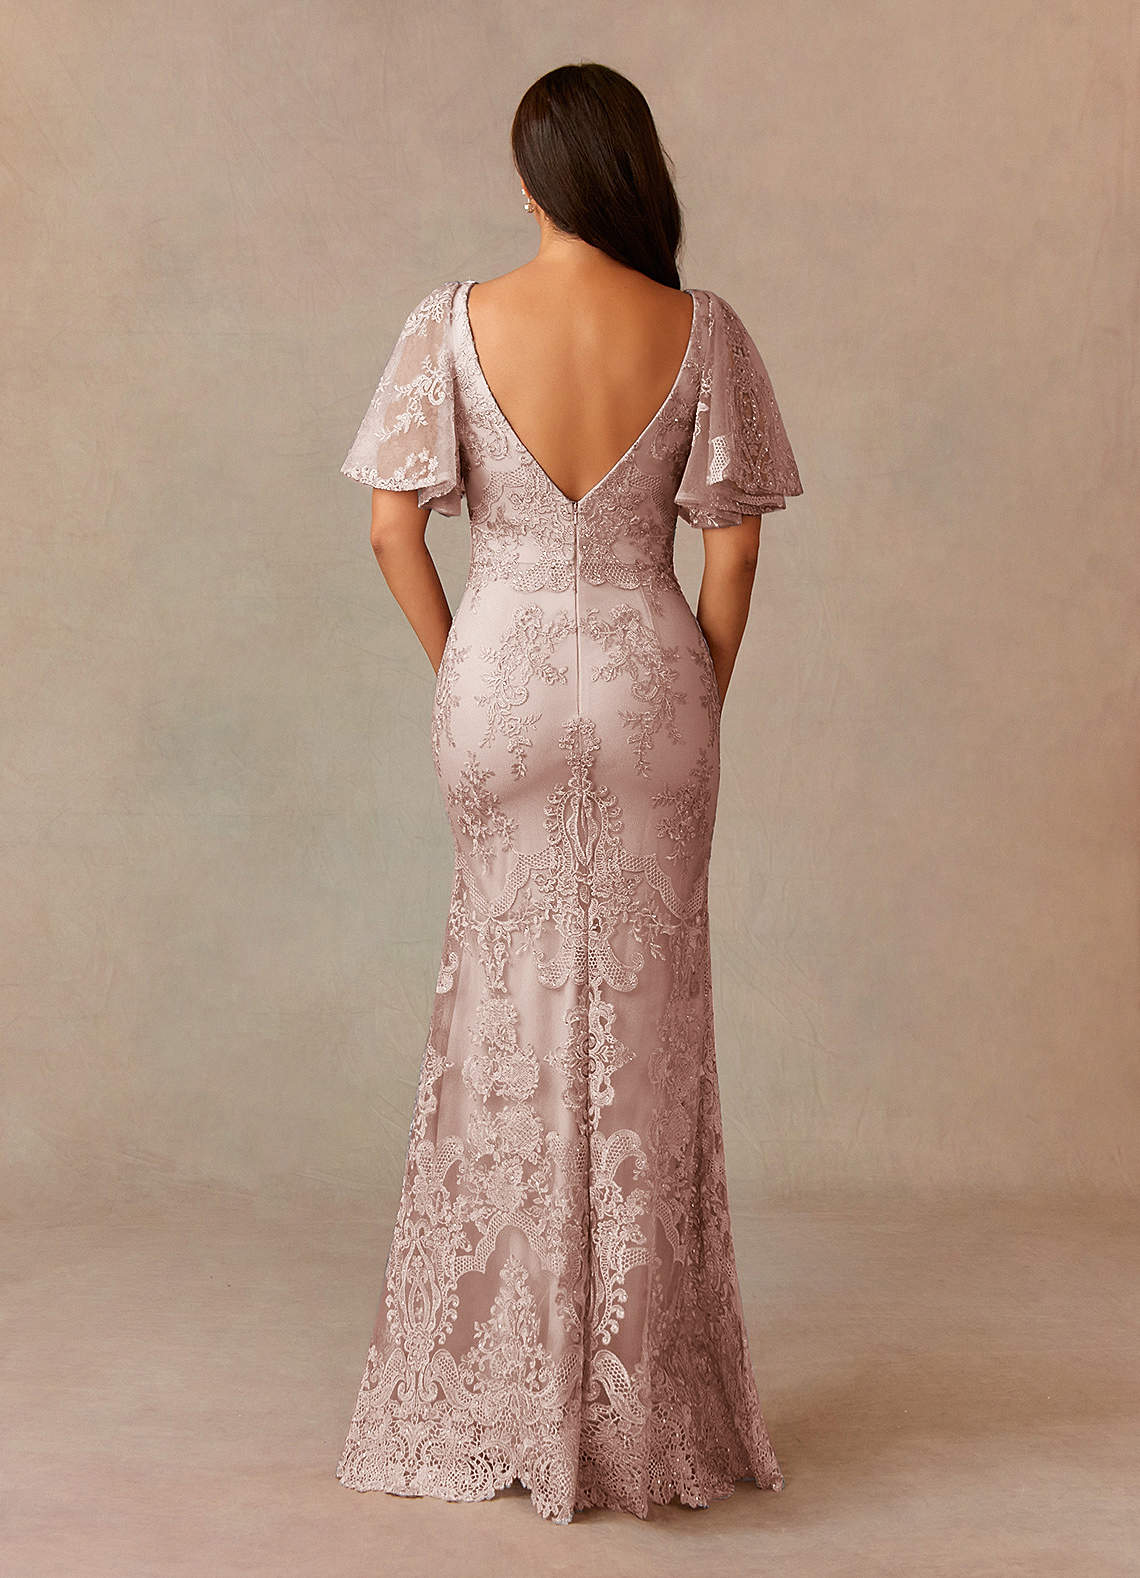 Upstudio Joliet Mother of the Bride Dresses Mermaid V-Neck Lace Floor-Length Dress image1